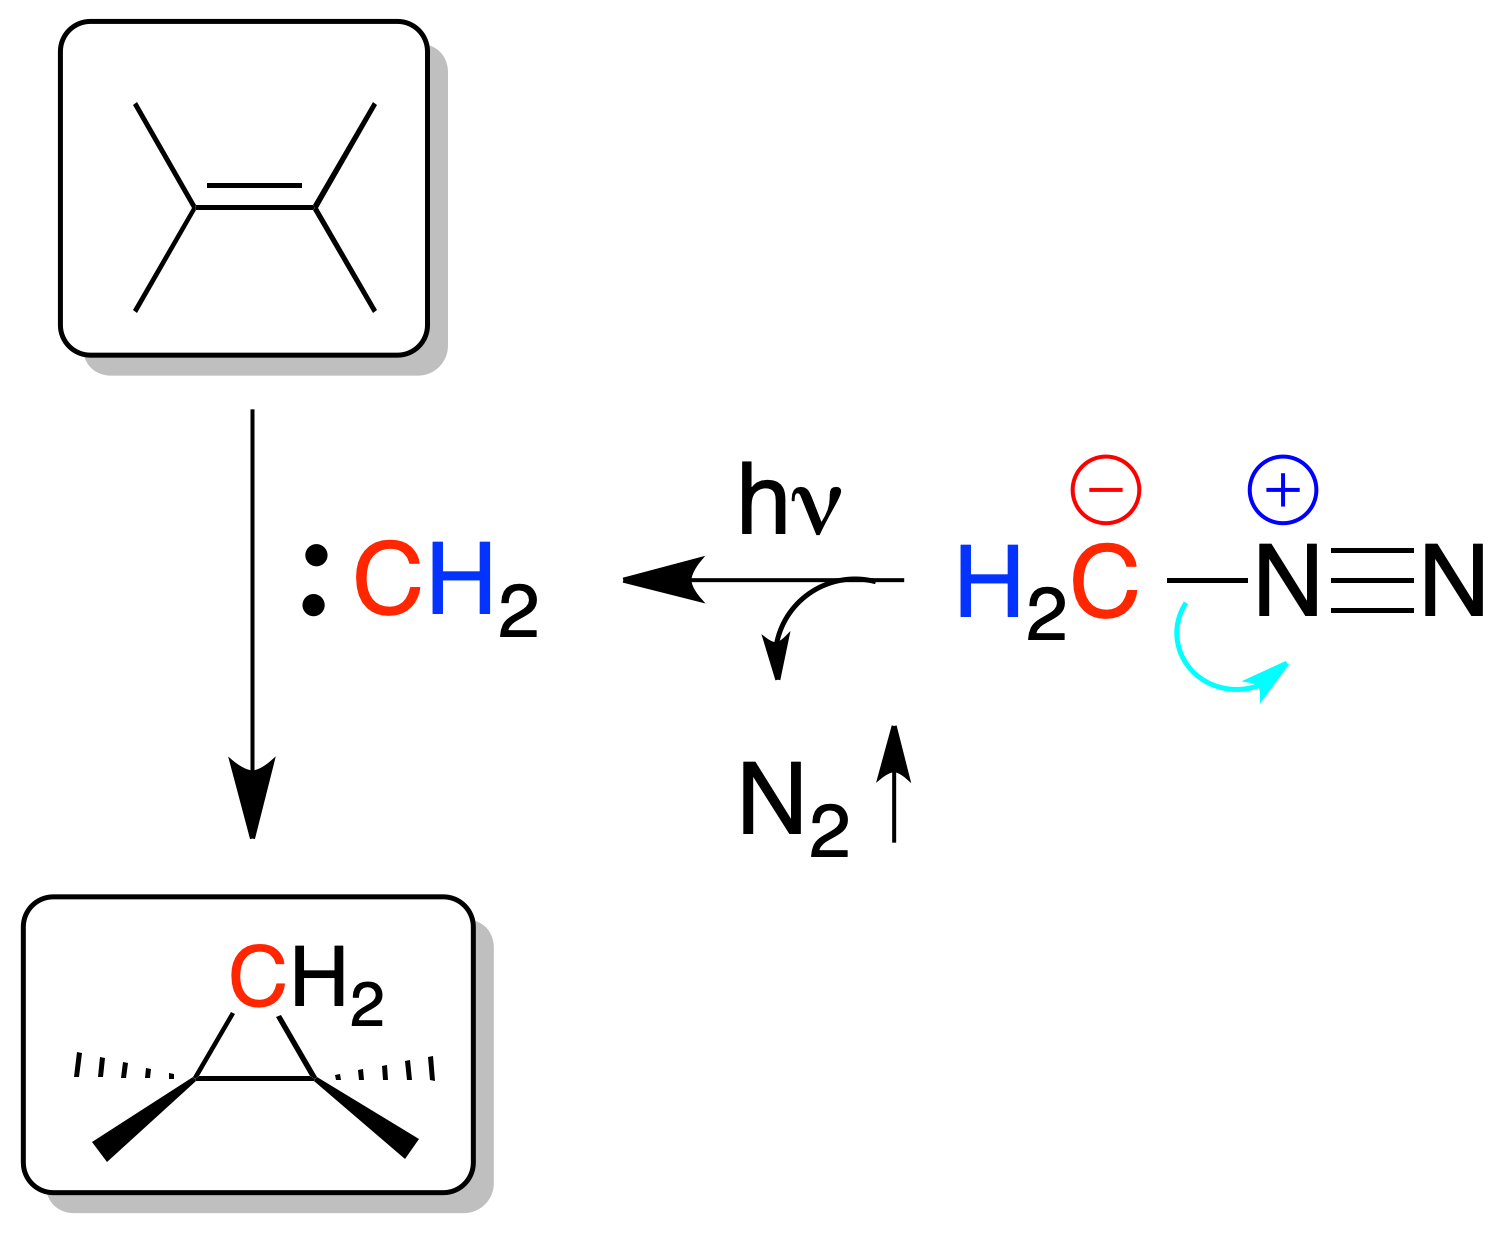 reactivity of alkenes: Addition of carbenes